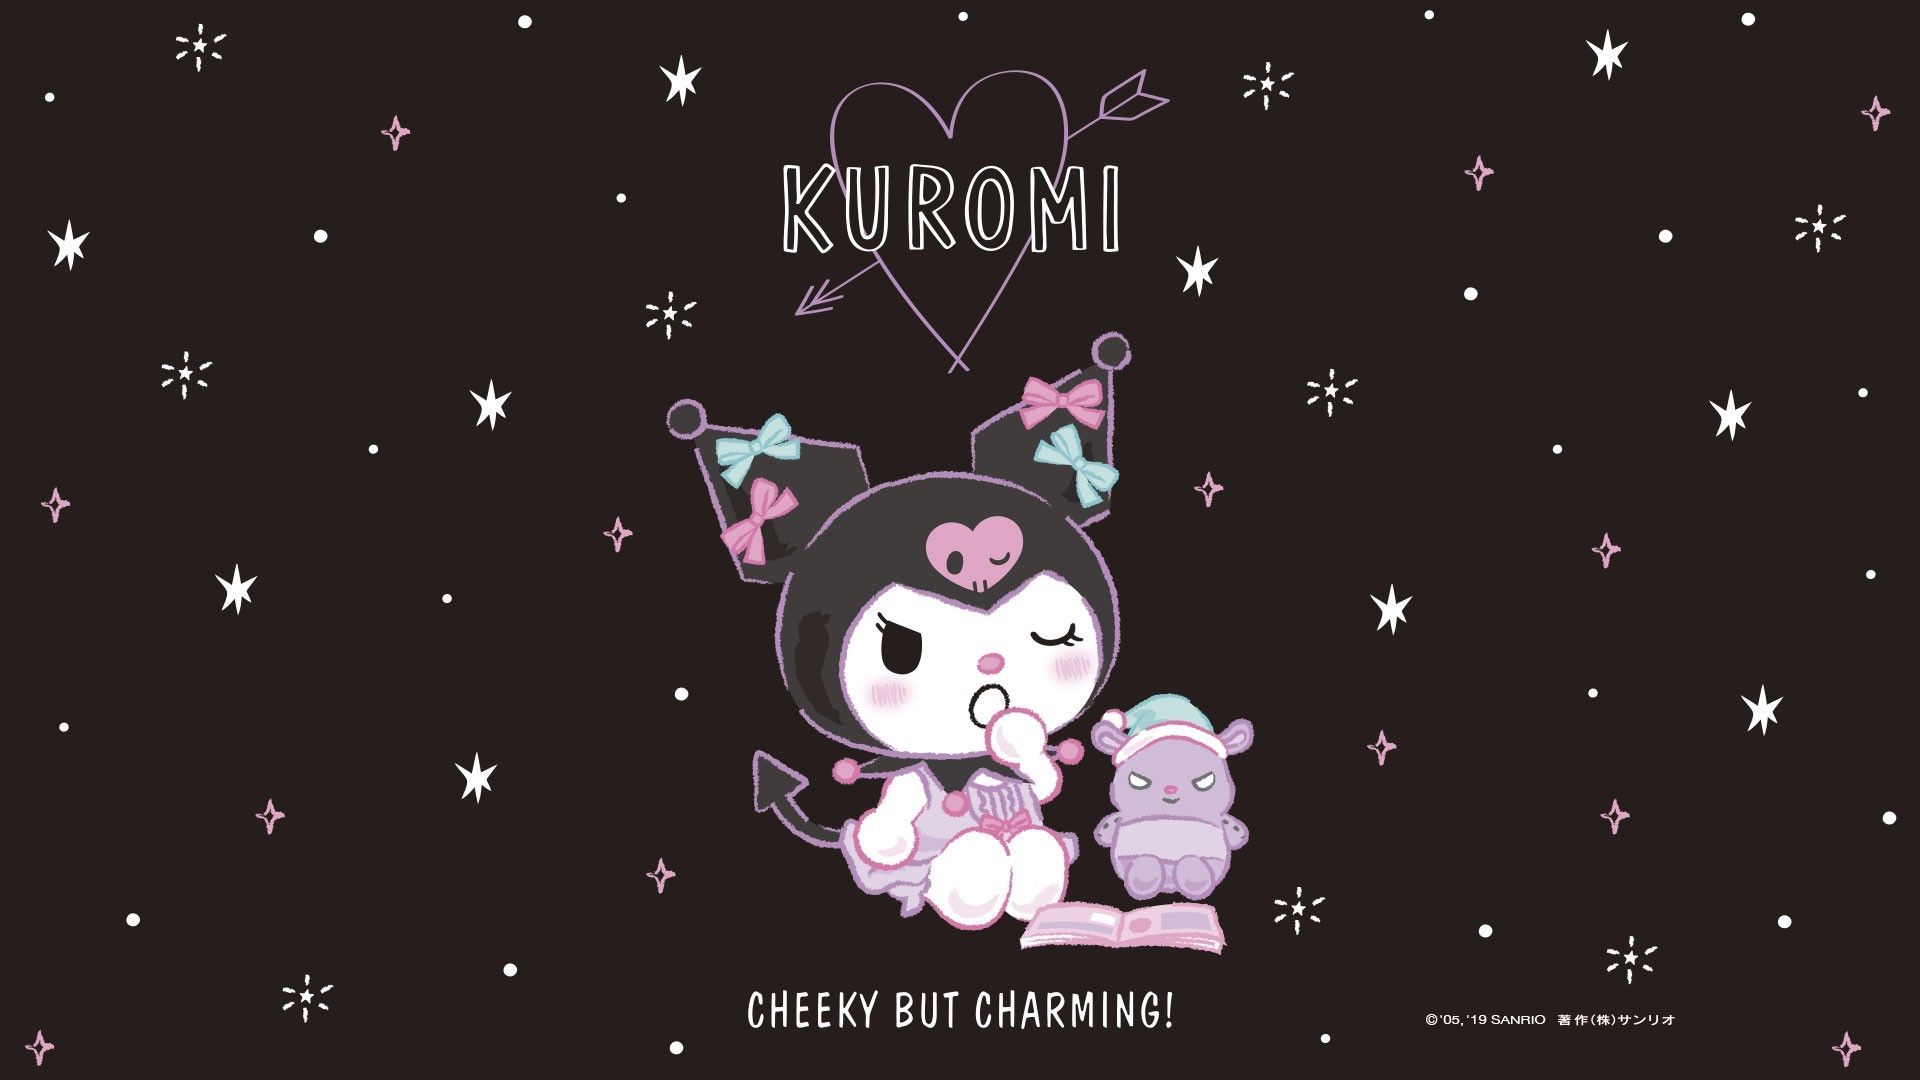 Kuromi Wallpaper. Sanrio wallpaper, My melody wallpaper, Kitty wallpaper